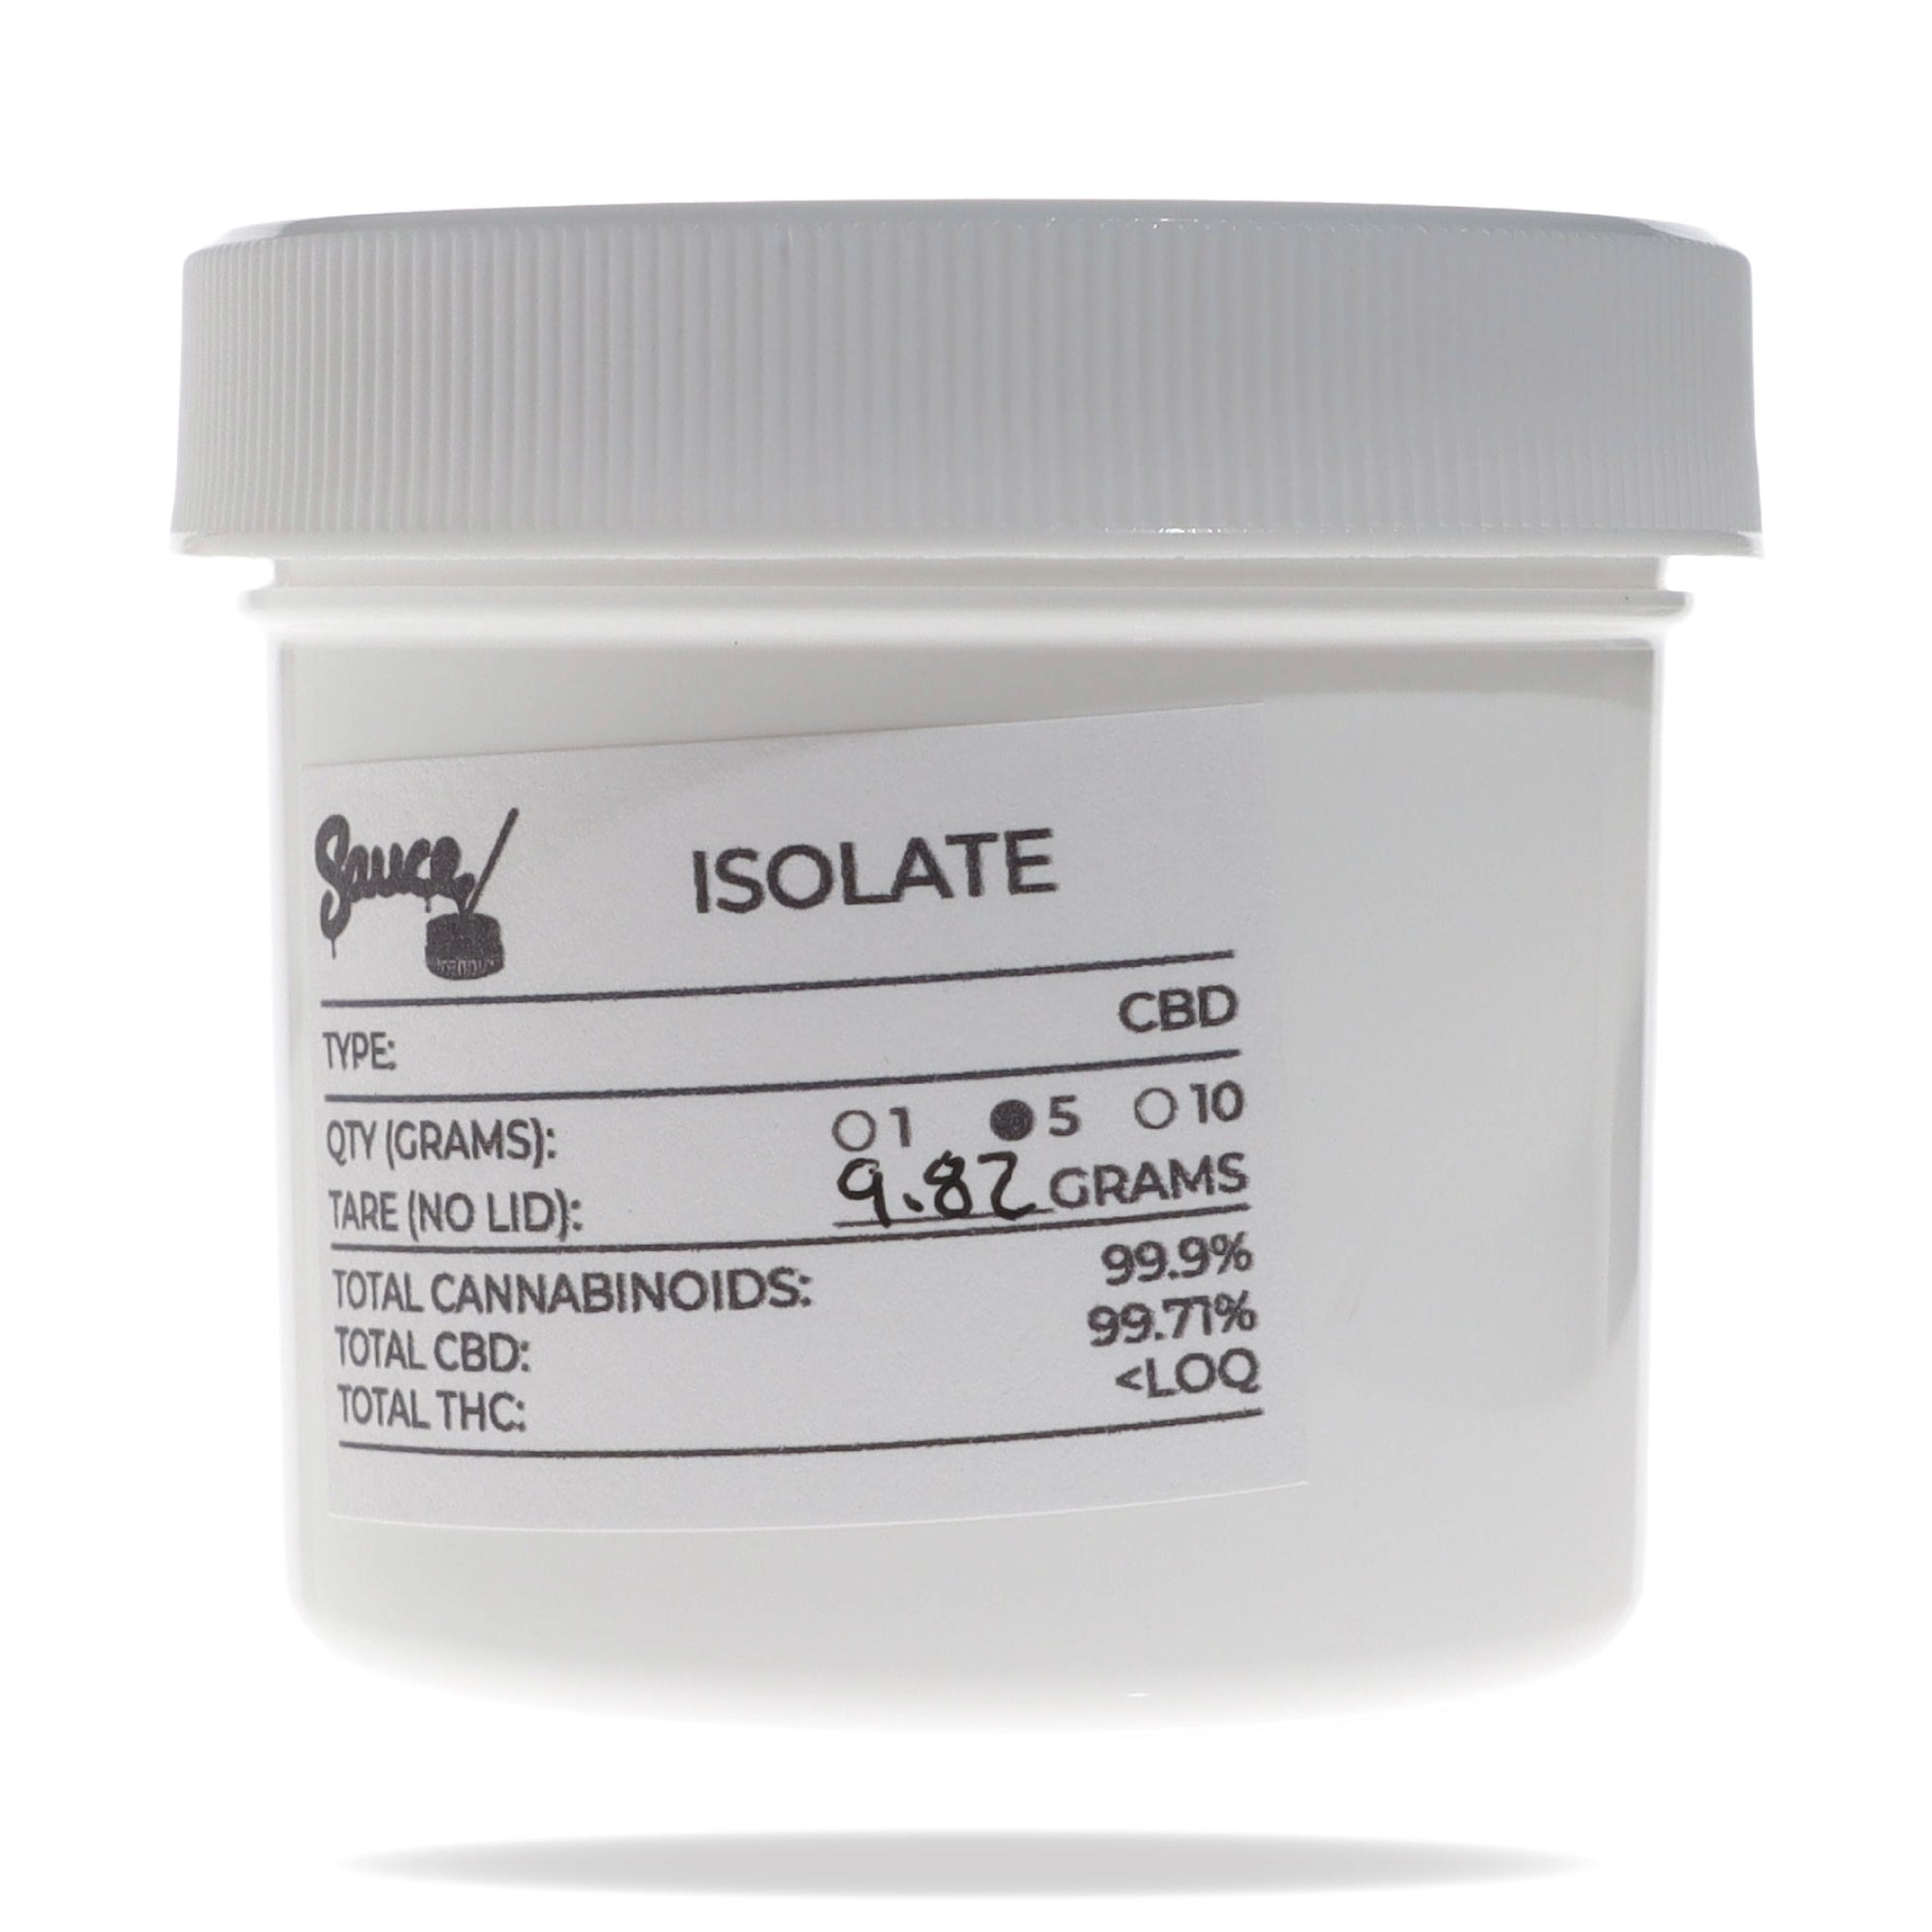 Image of CBD Isolate 5 gram jar.